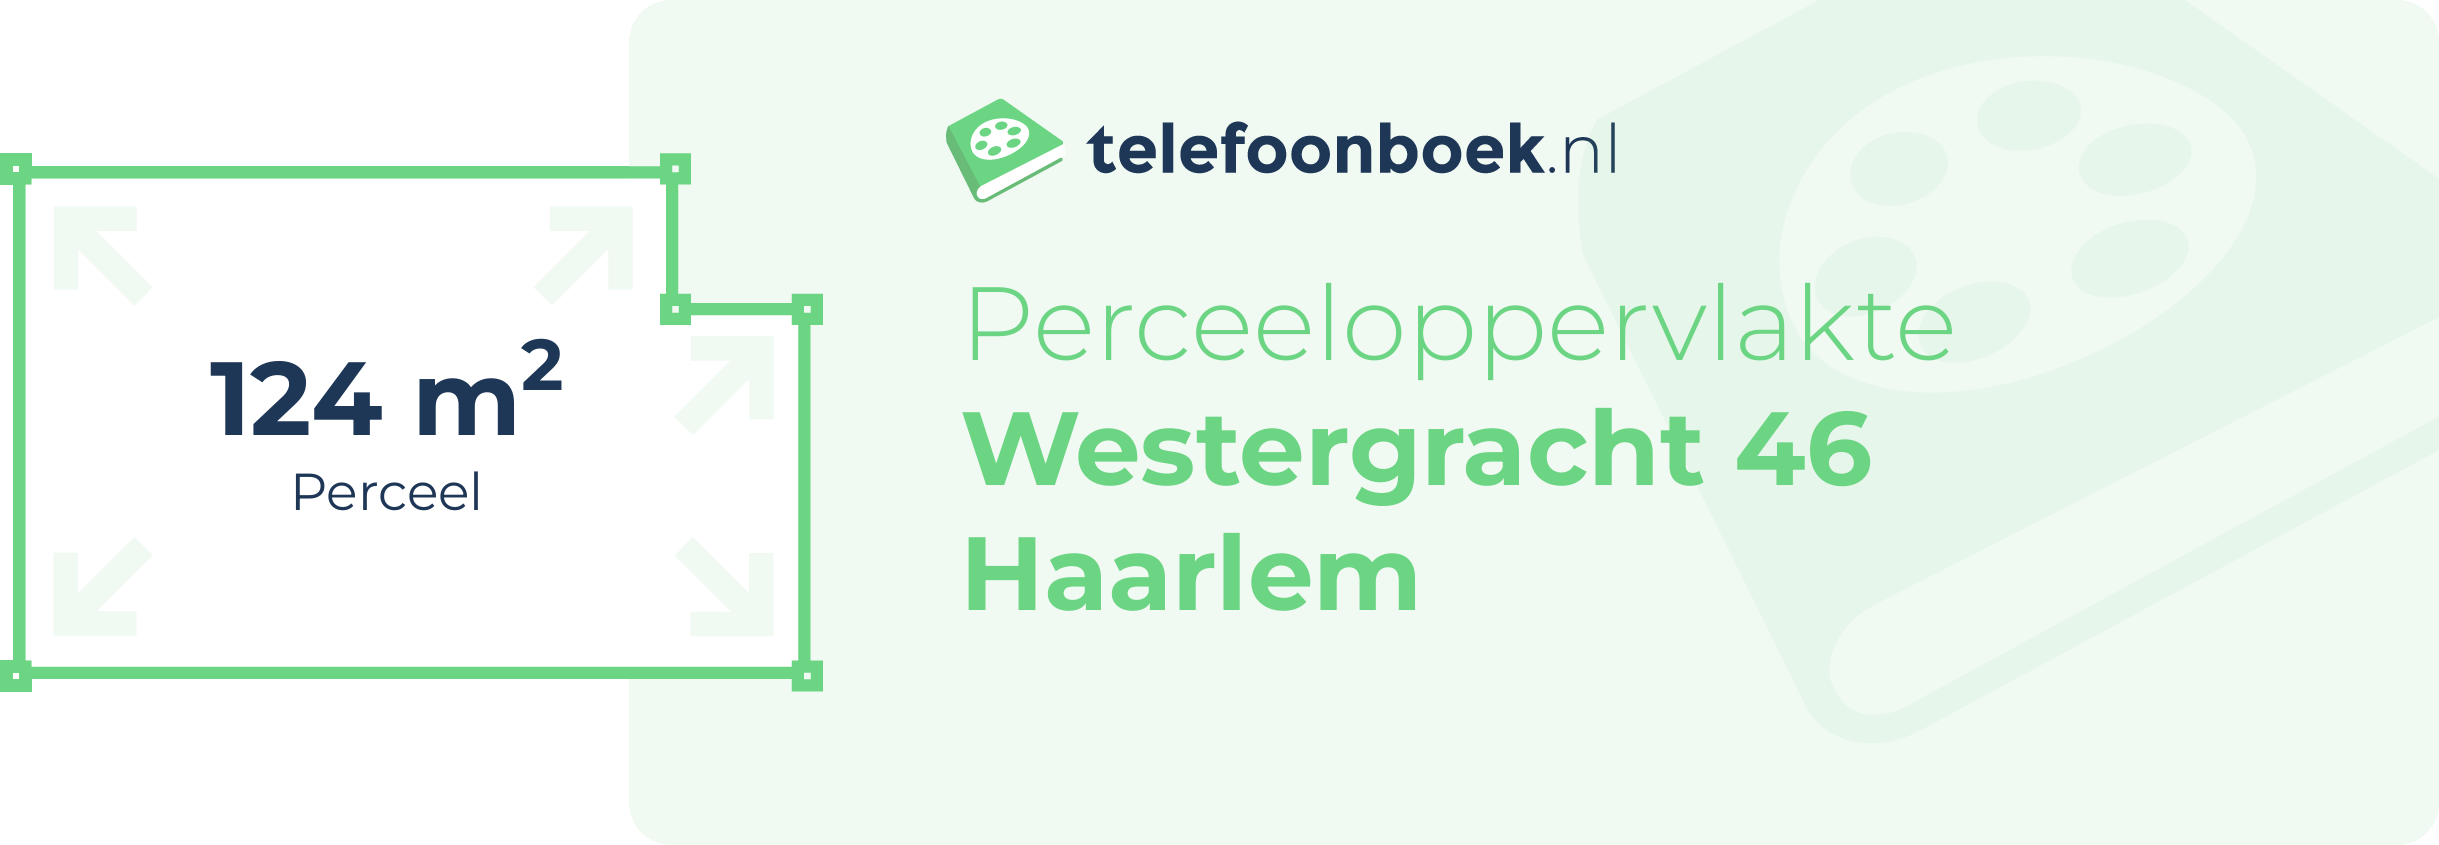 Perceeloppervlakte Westergracht 46 Haarlem